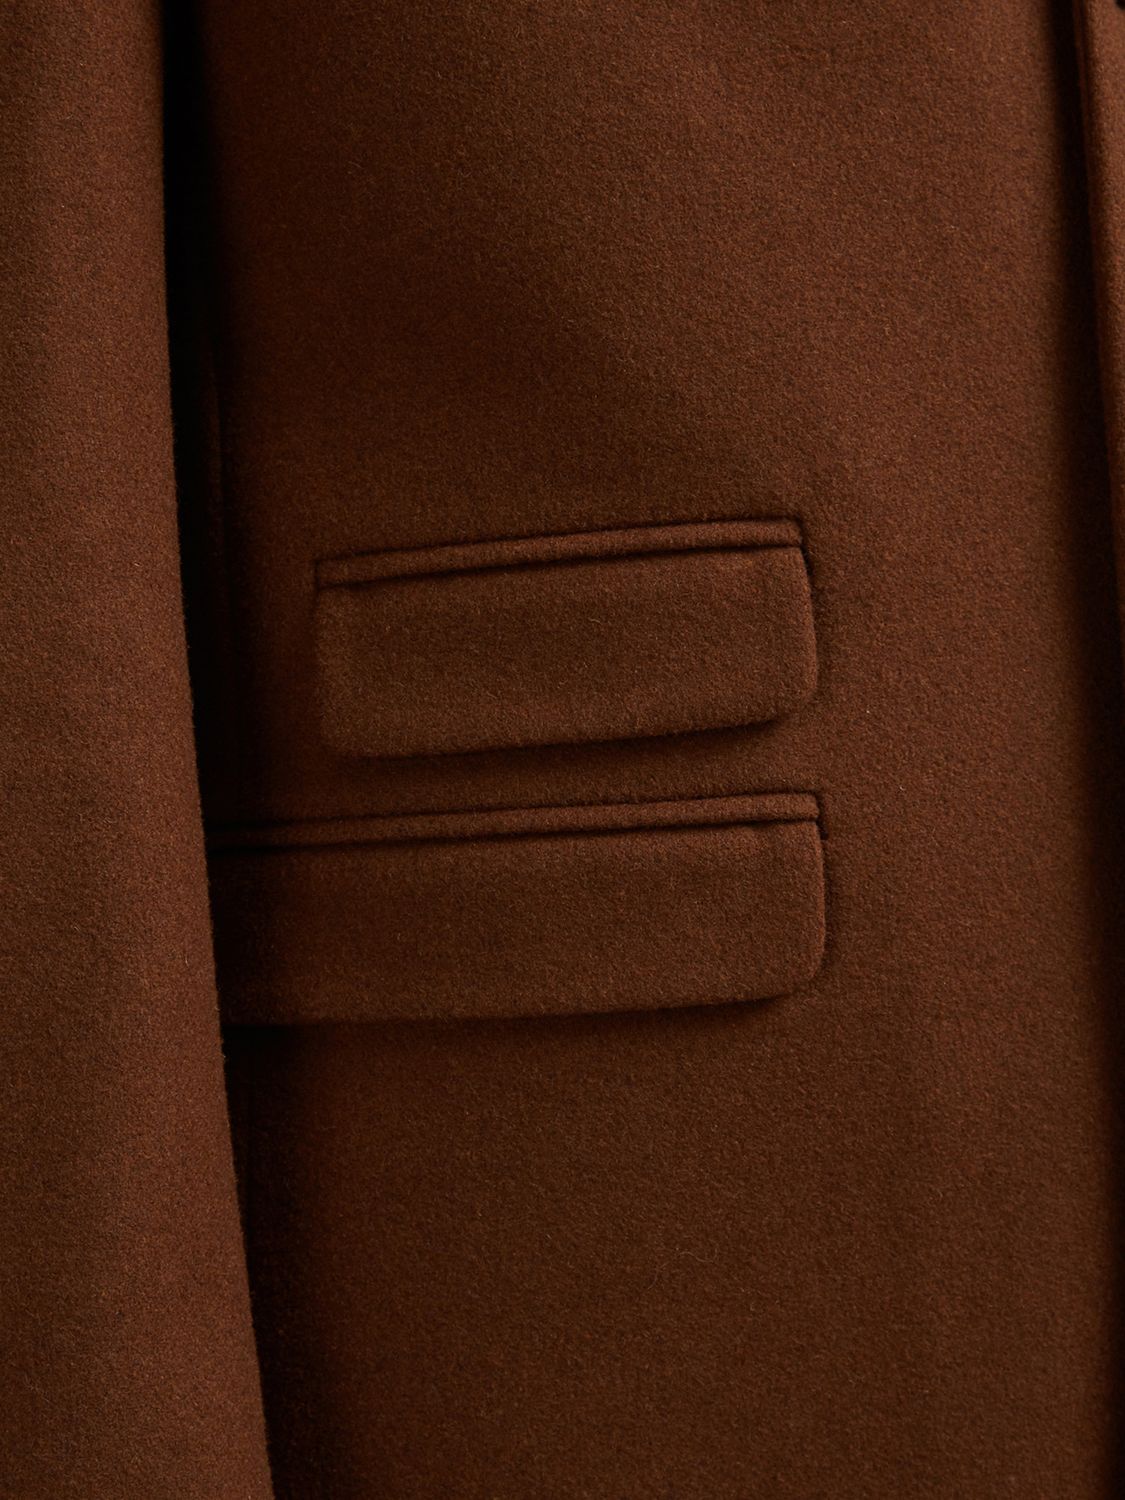 Ted Baker Wool Blend Overcoat, Dark Tan, 42R